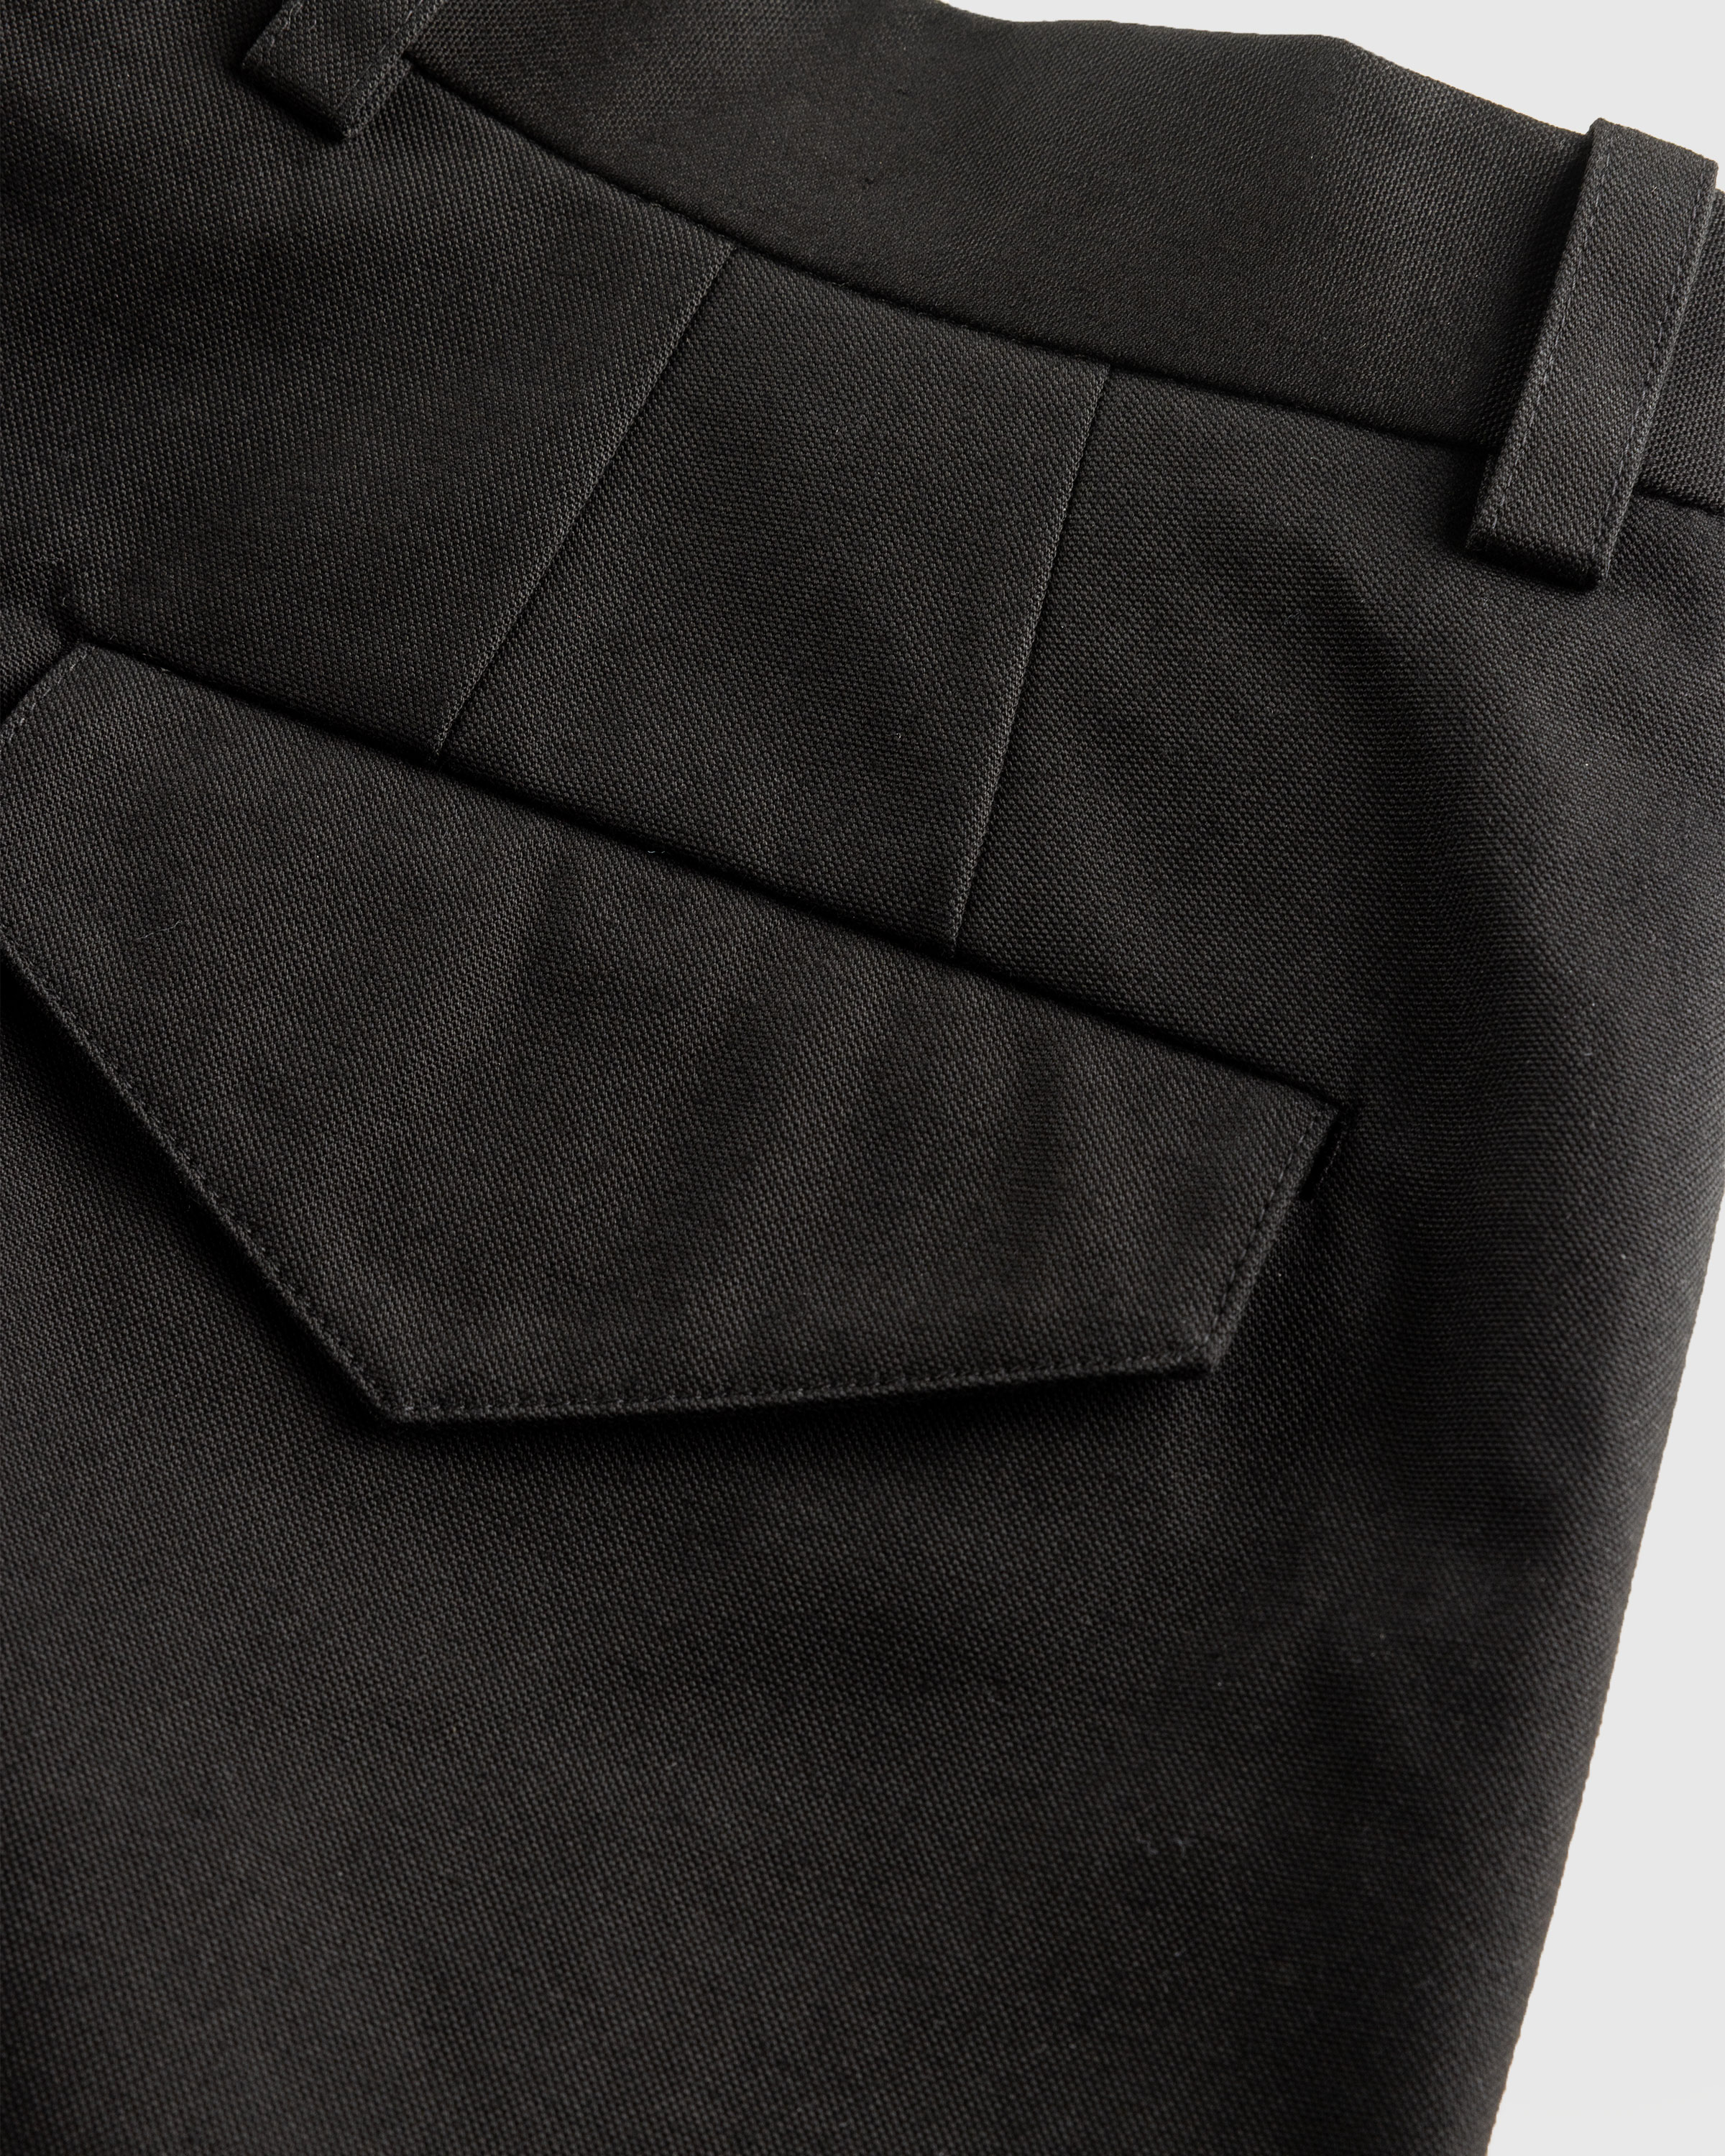 Jil Sander – Trouser 105 Shorts Black - Bermuda Cuts - Black - Image 5